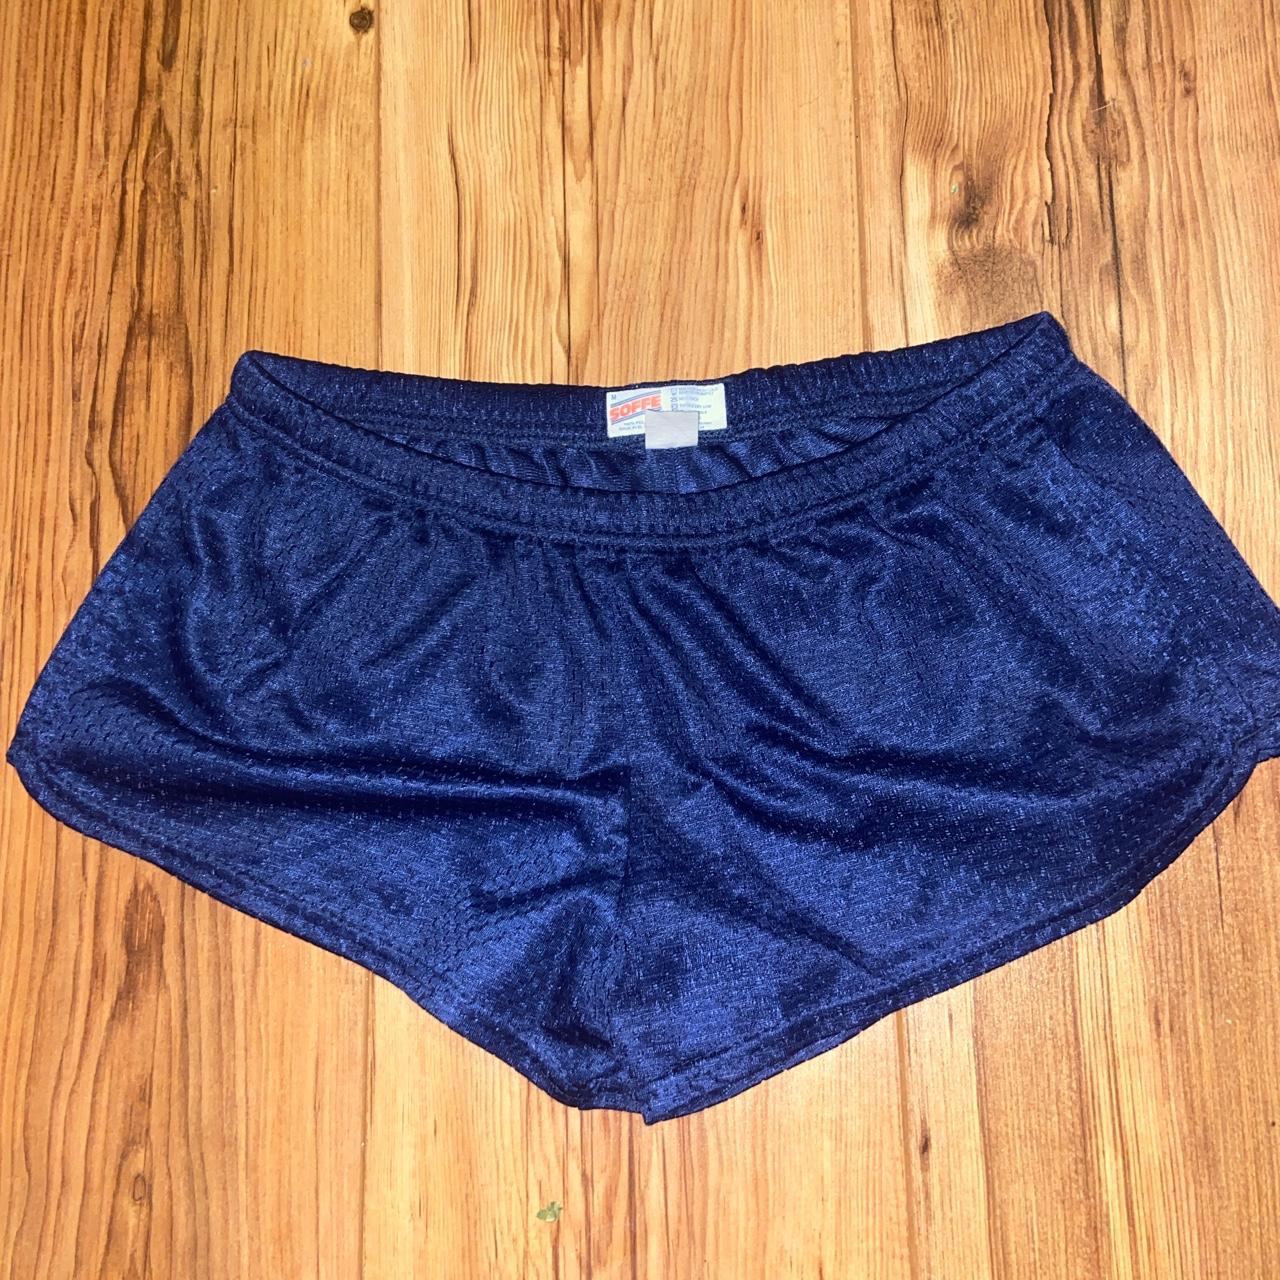 Womens Navy Blue Soffe Shorts